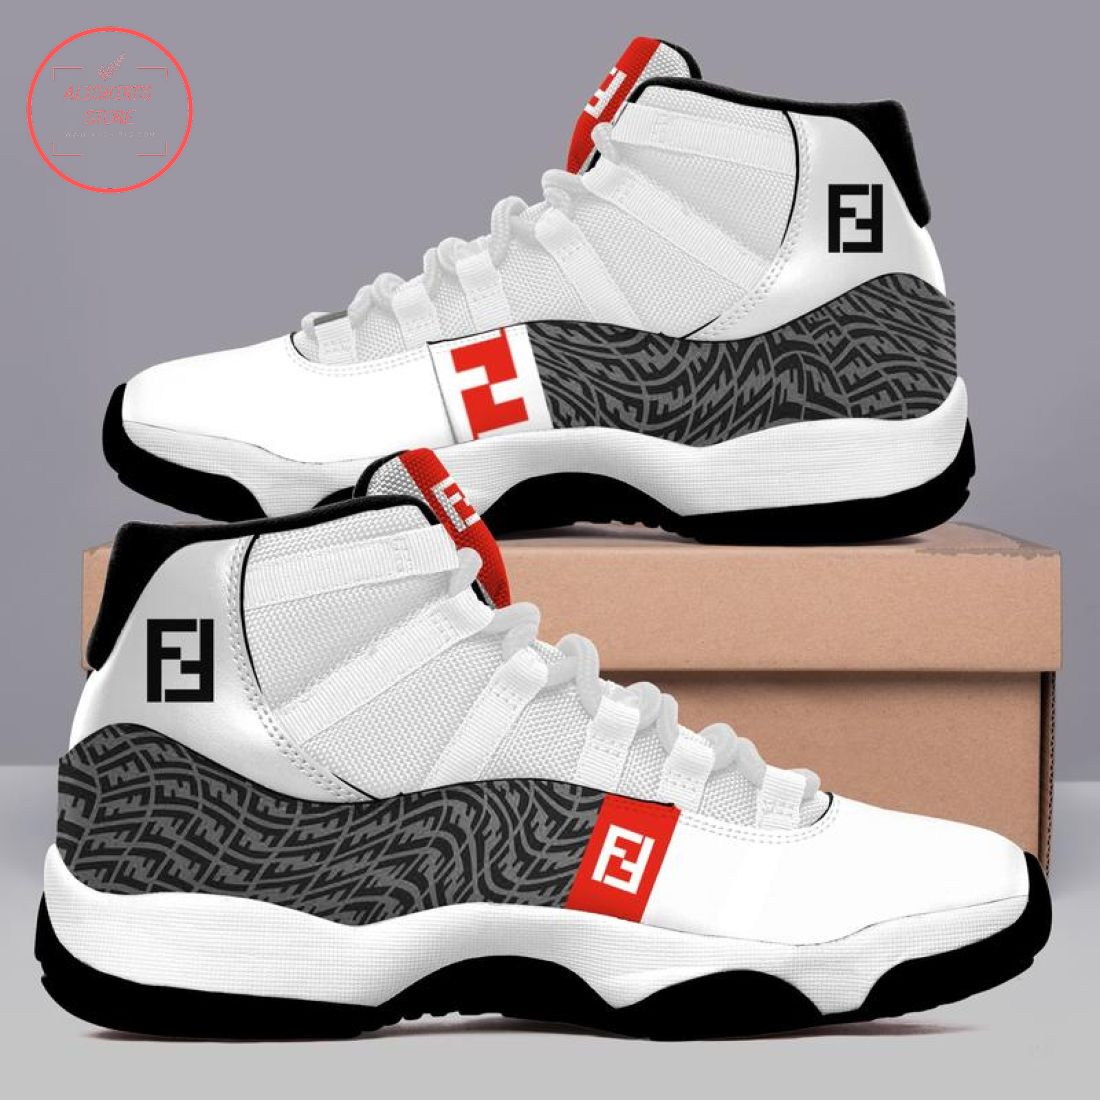 Fendi FF Luxury Brand Air Jordan 11 Sneaker Shoes